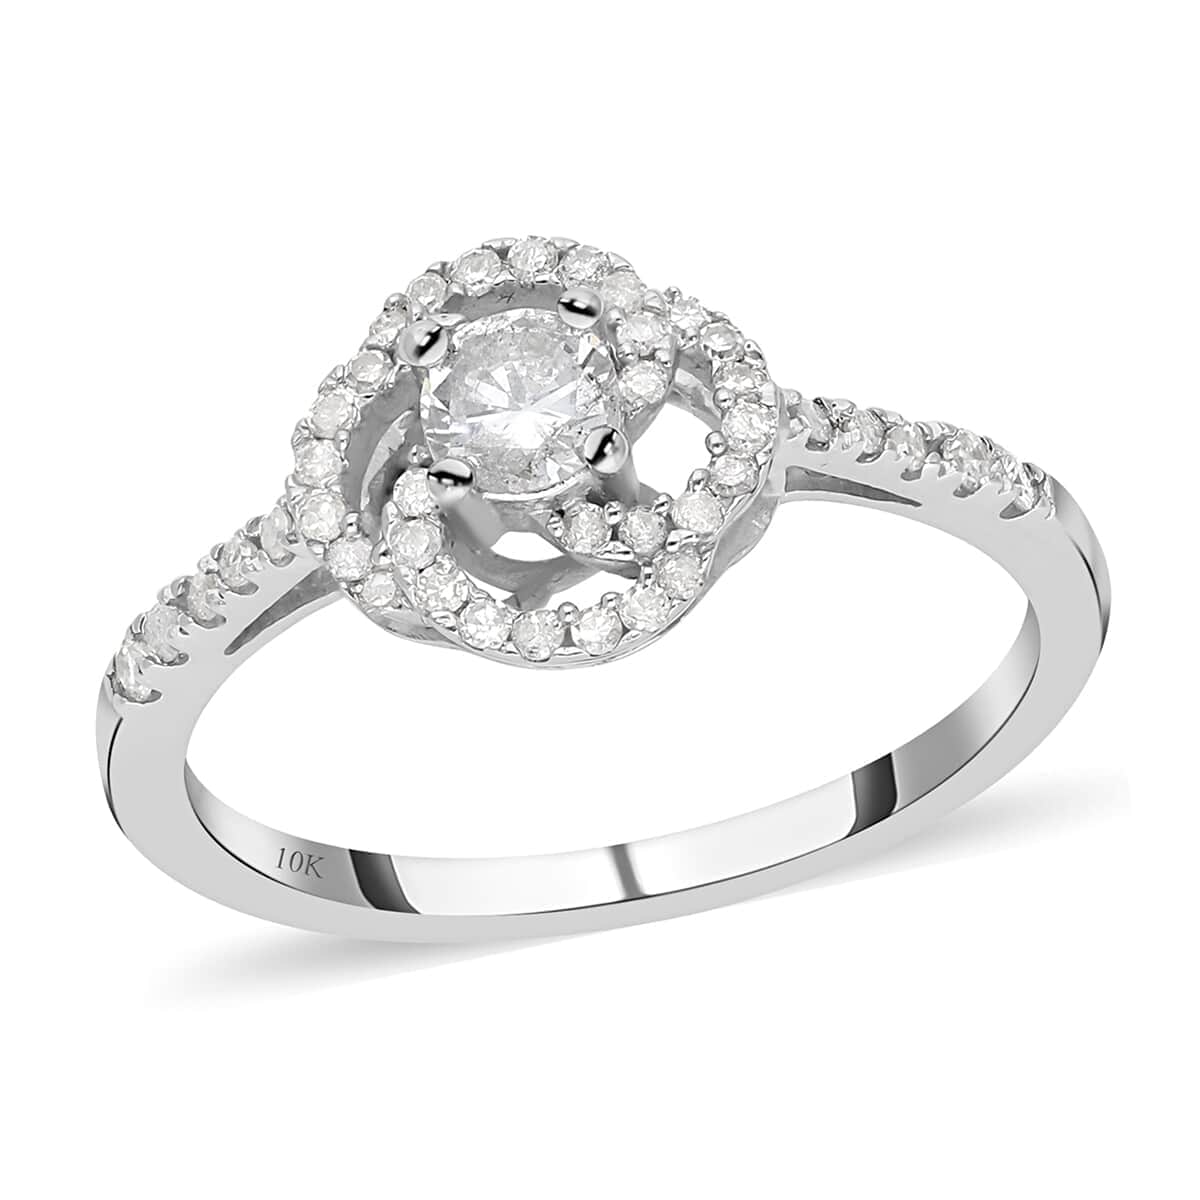 Luxoro 10K White Gold G-H I2-I3 Diamond Ring, Promise Rings (Size 9.0) 0.50 ctw image number 0